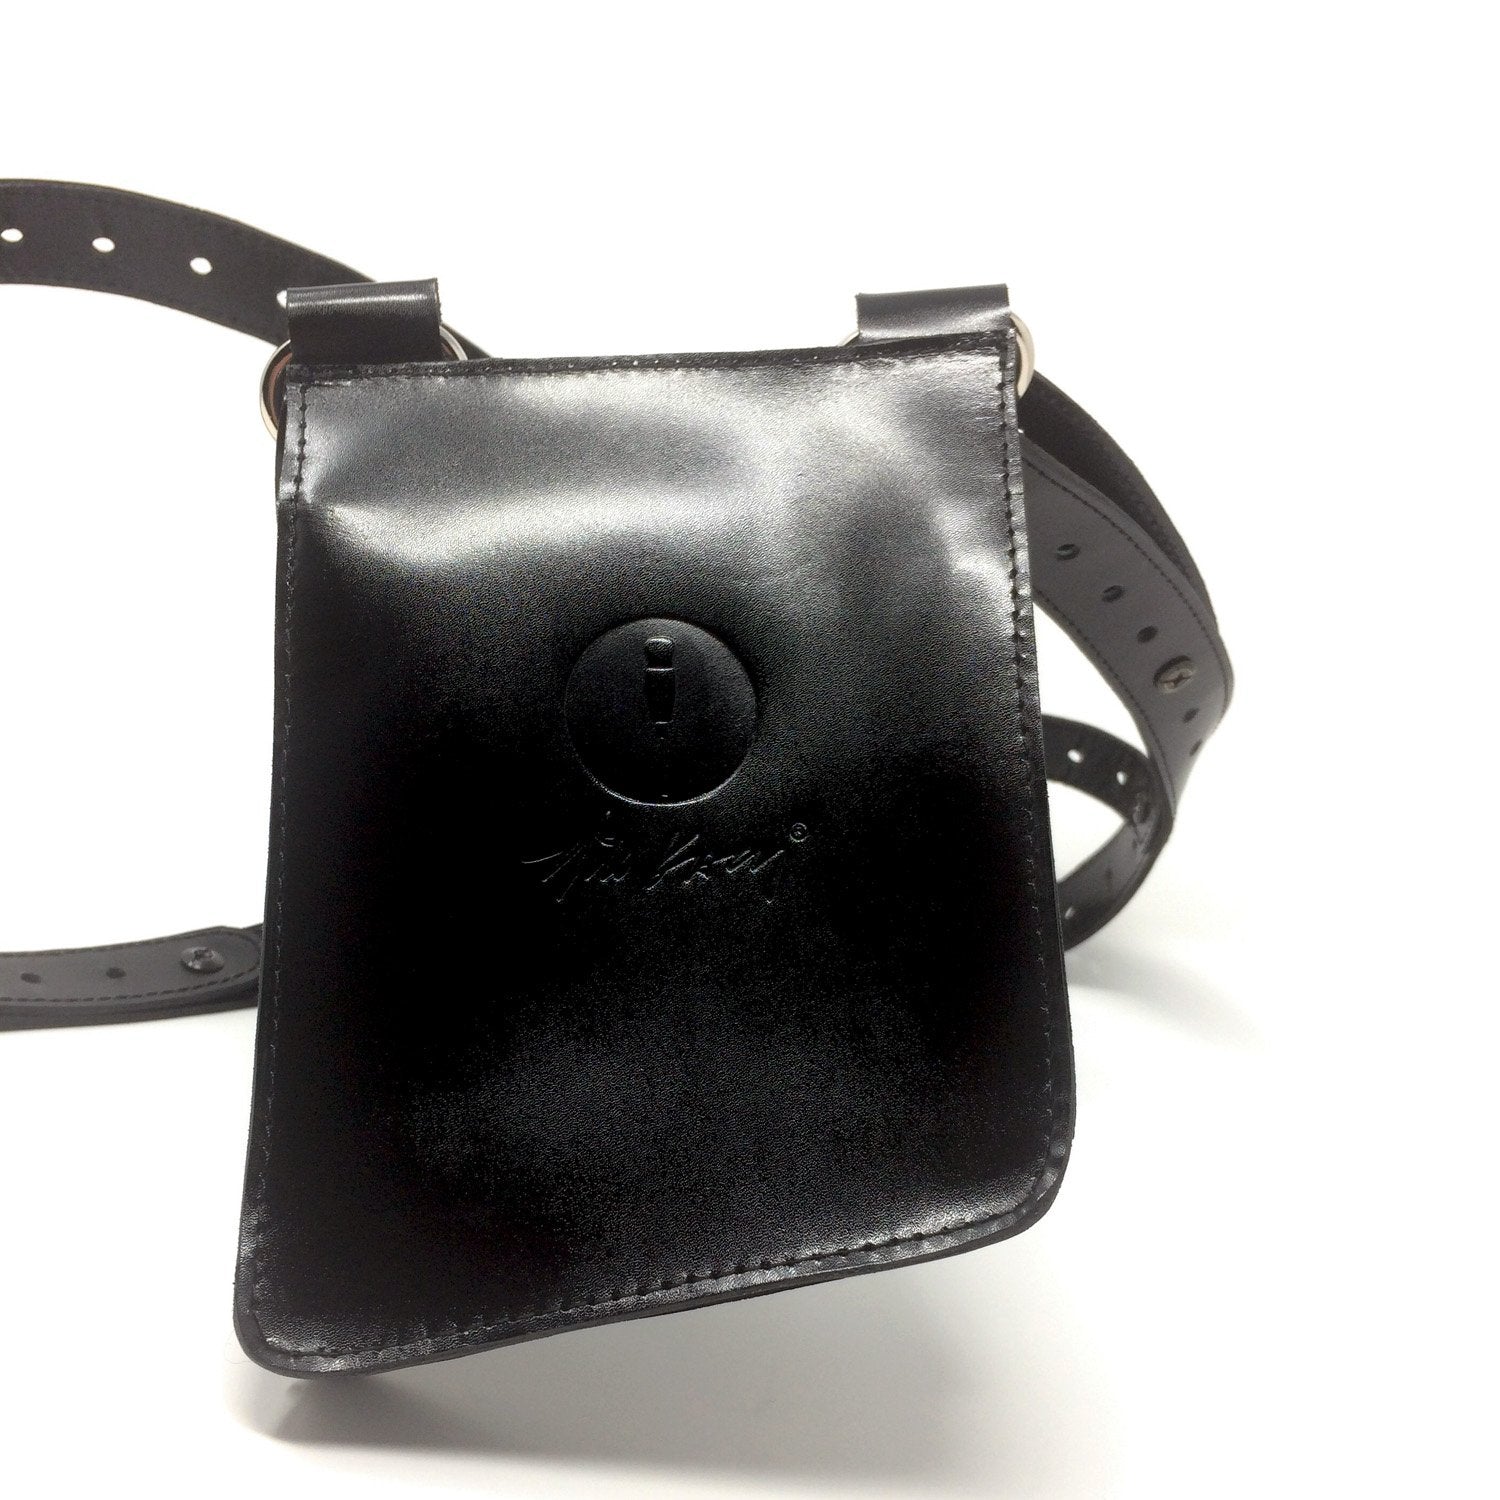 NEW) Genderfree with Dual) Bag | + NiK Adjustable or Utility Kacy Holster Modular Harness v2 (Single